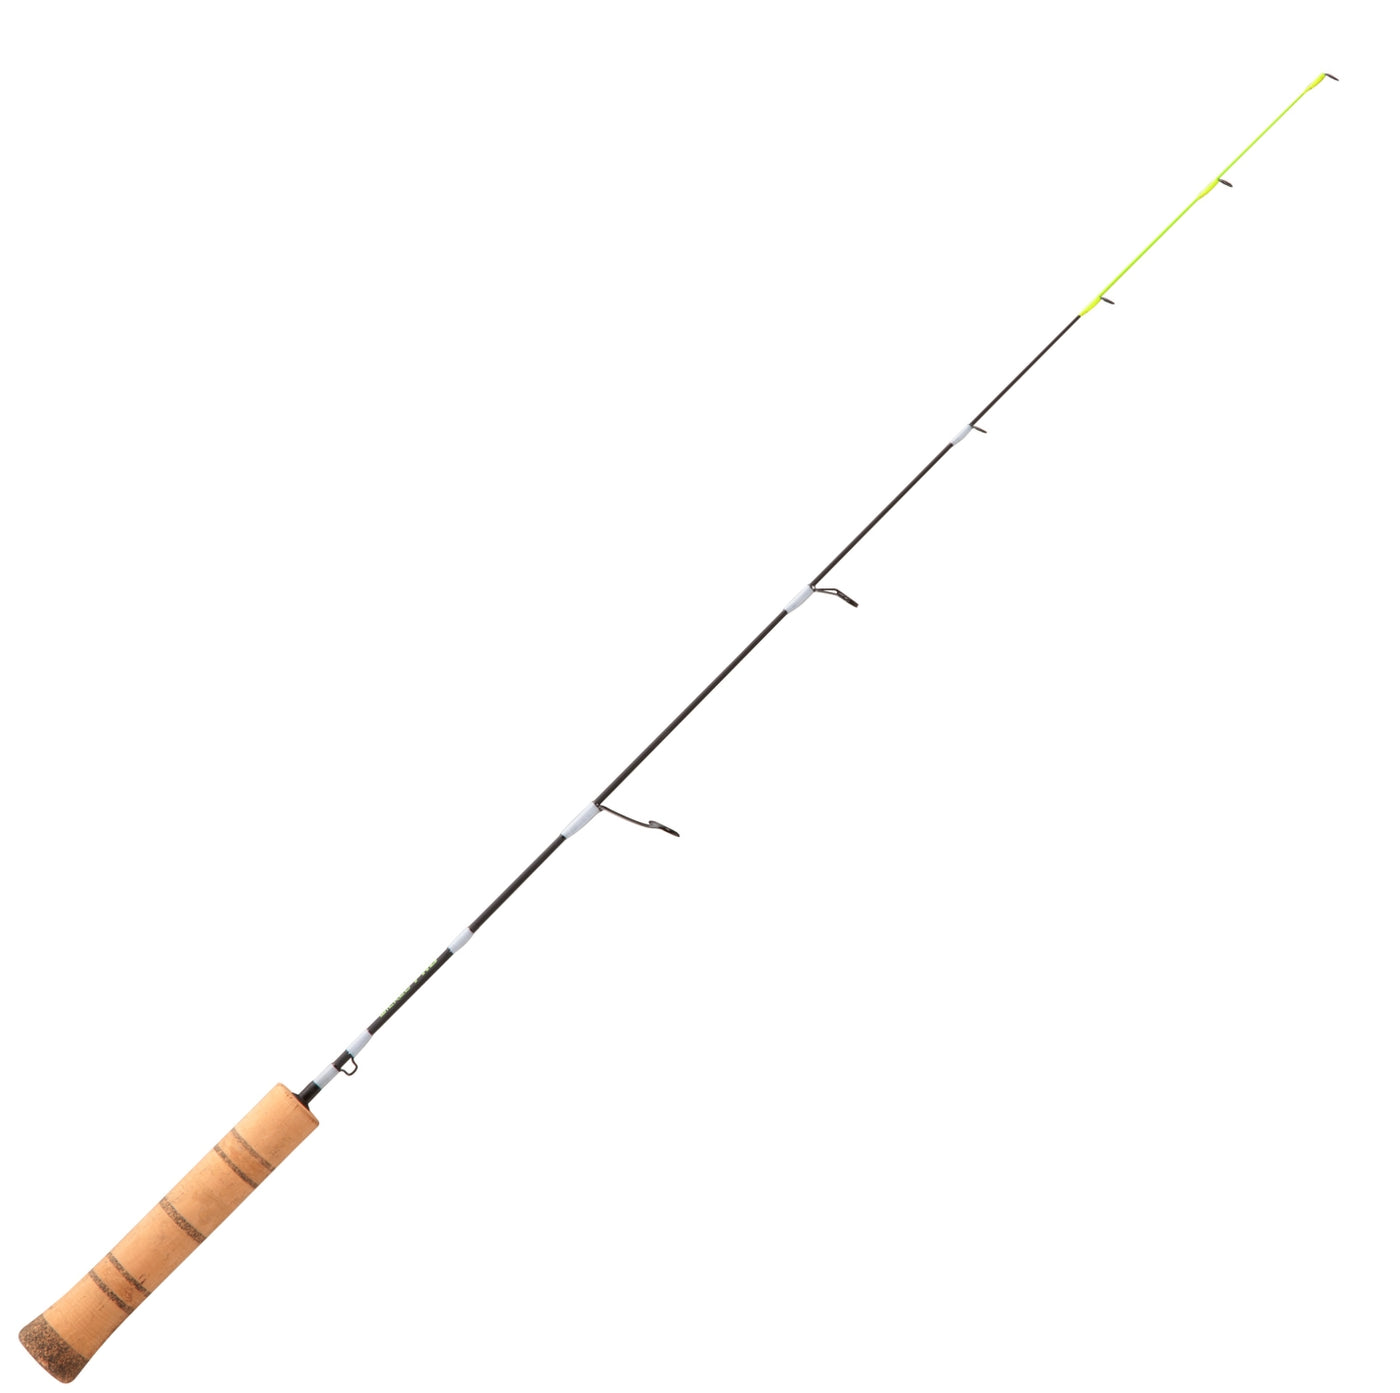 Lumiglas Model 1310 13' 10' 1 Piece Surf Rod Fishing Pole with